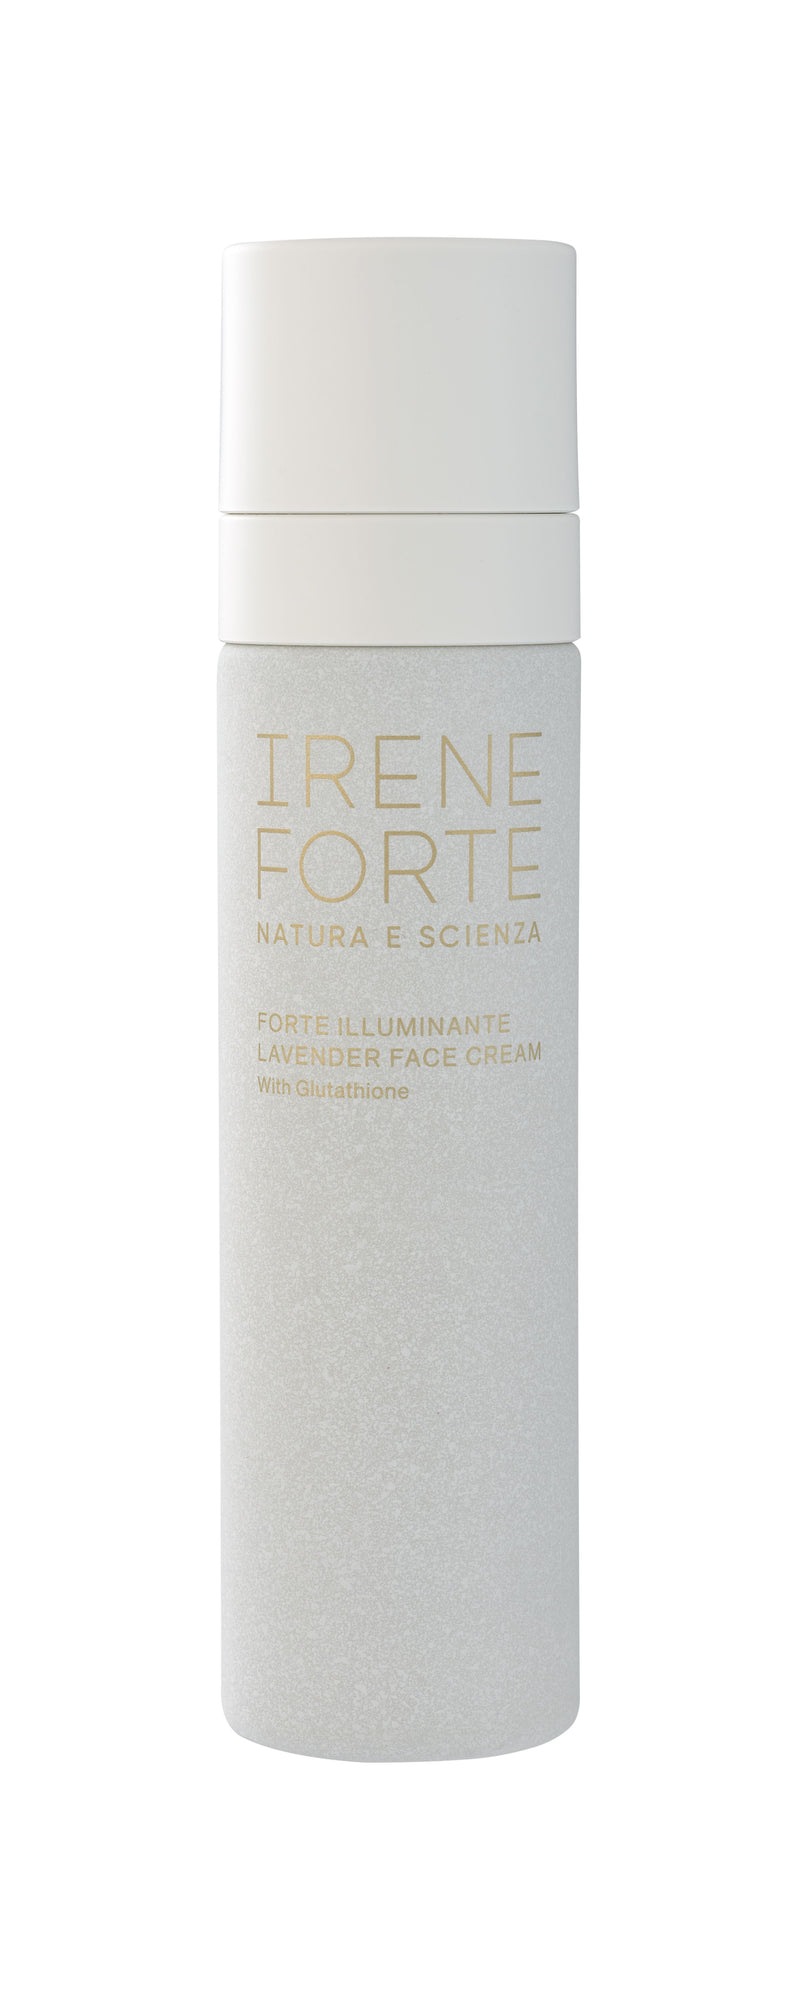 Irene Forte Lavander Face Cream with Glutathione 50ml